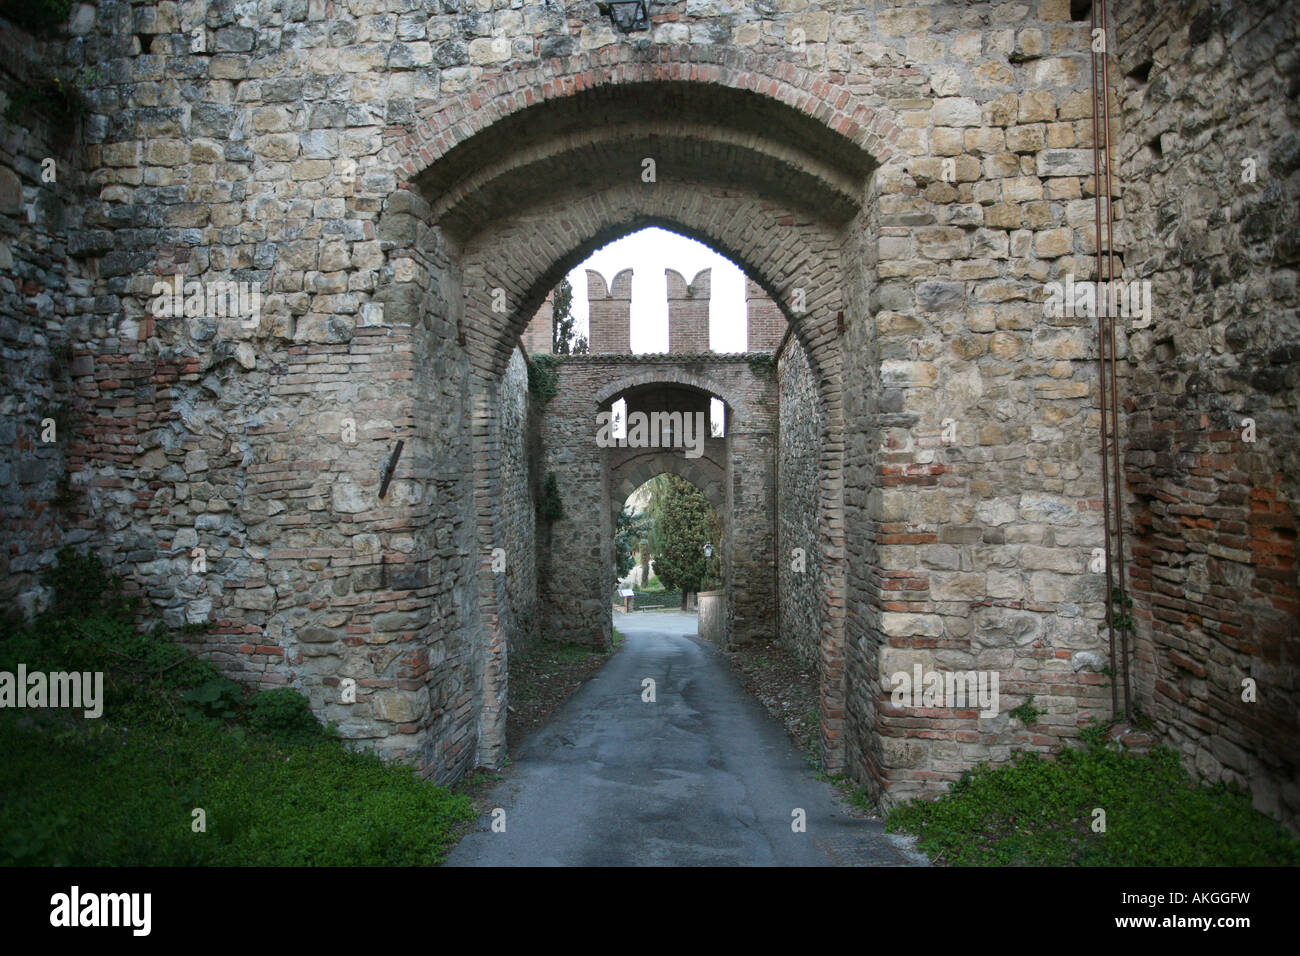 Castello di Serravalle, Emilia Romagna, Italien Stockfoto